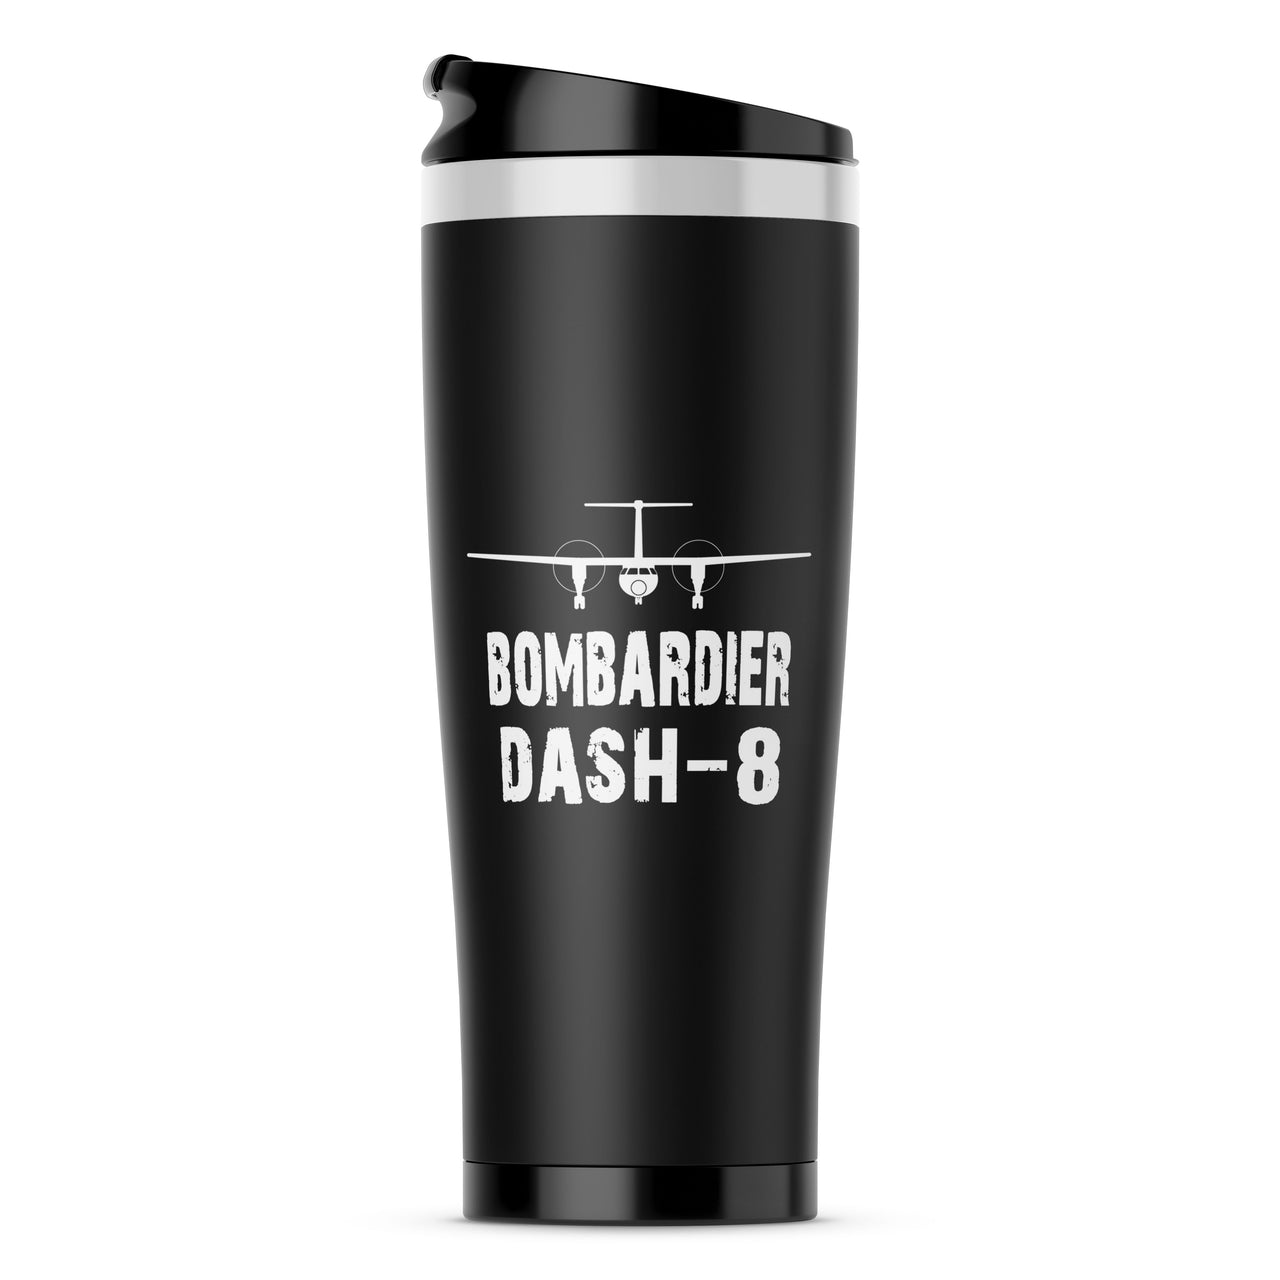 Bombardier Dash-8 & Plane Designed Travel Mugs